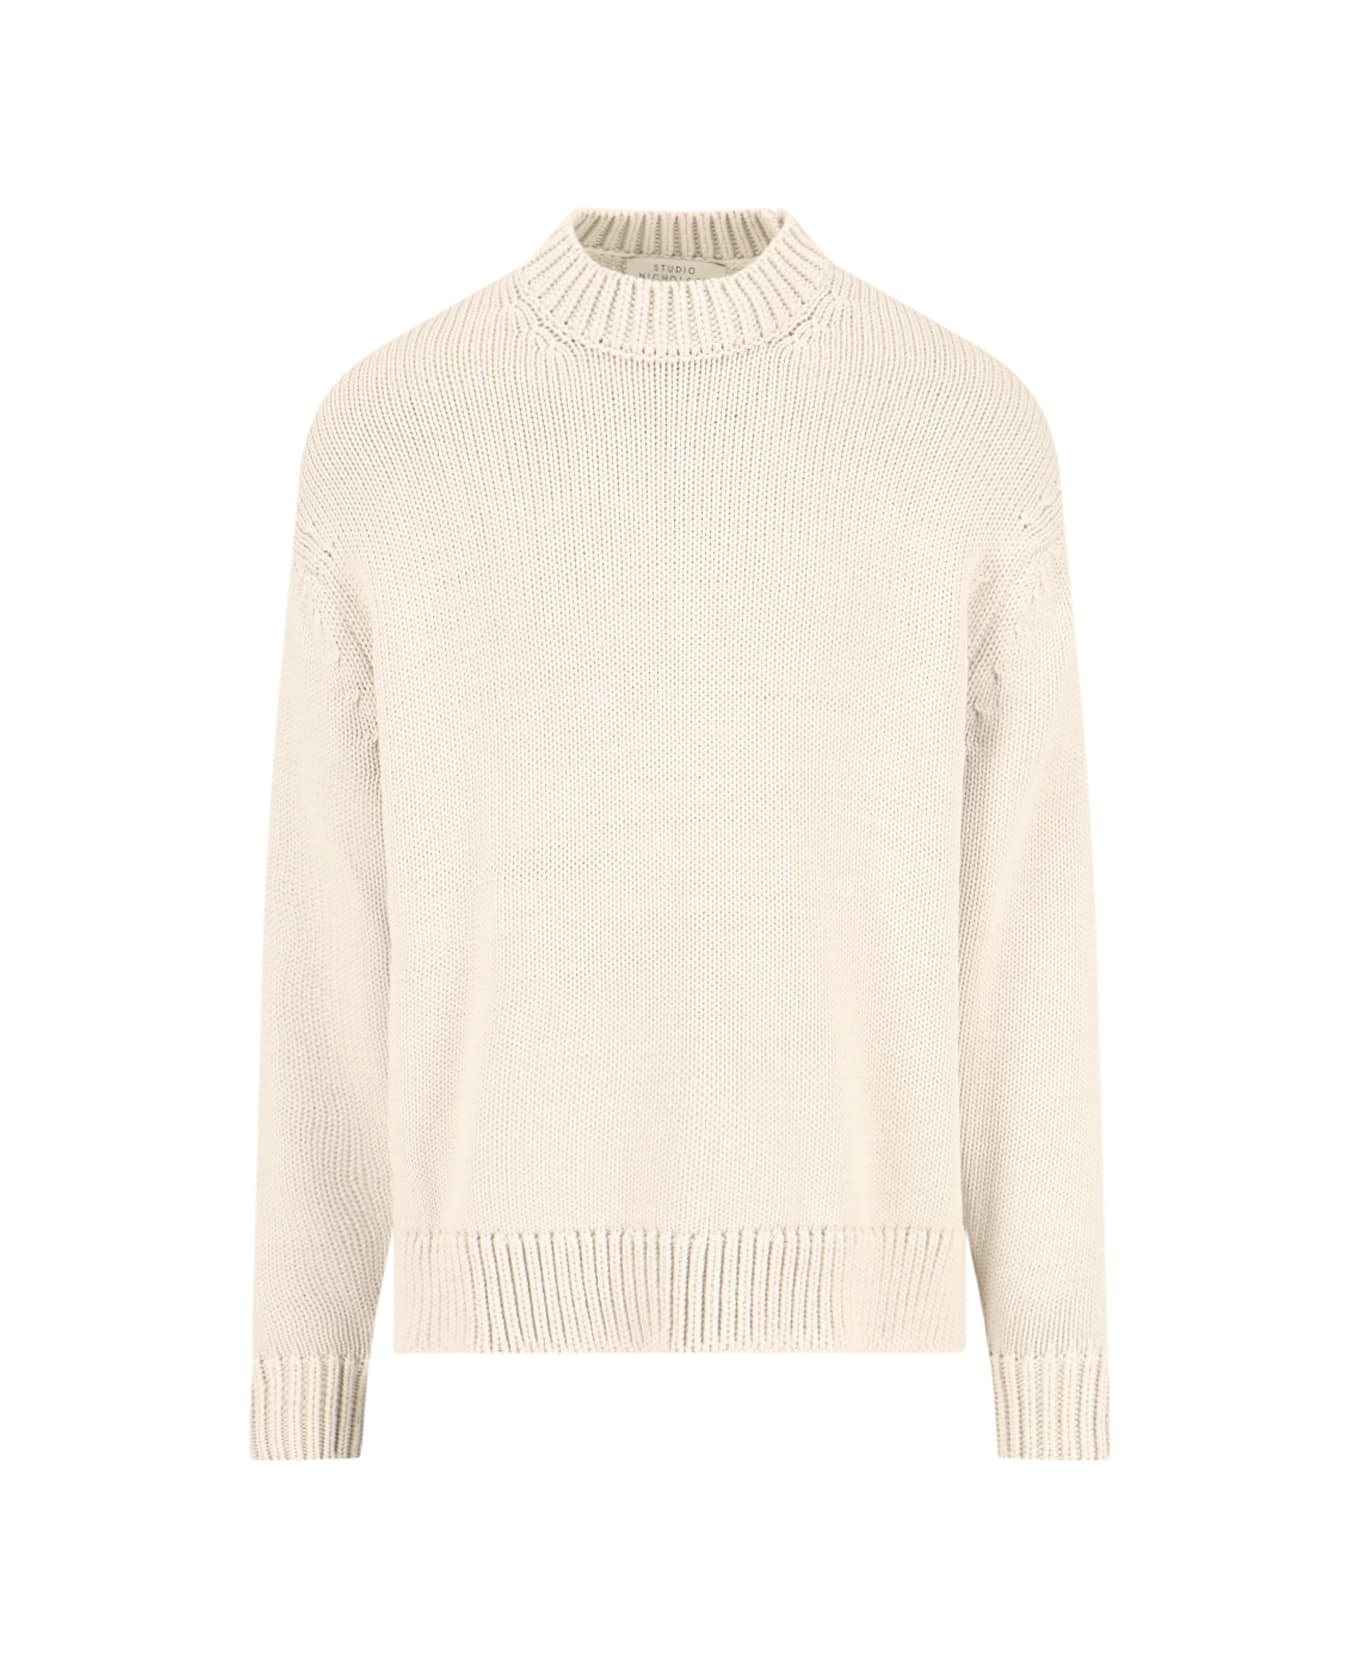 Studio Nicholson Sweater - Cream